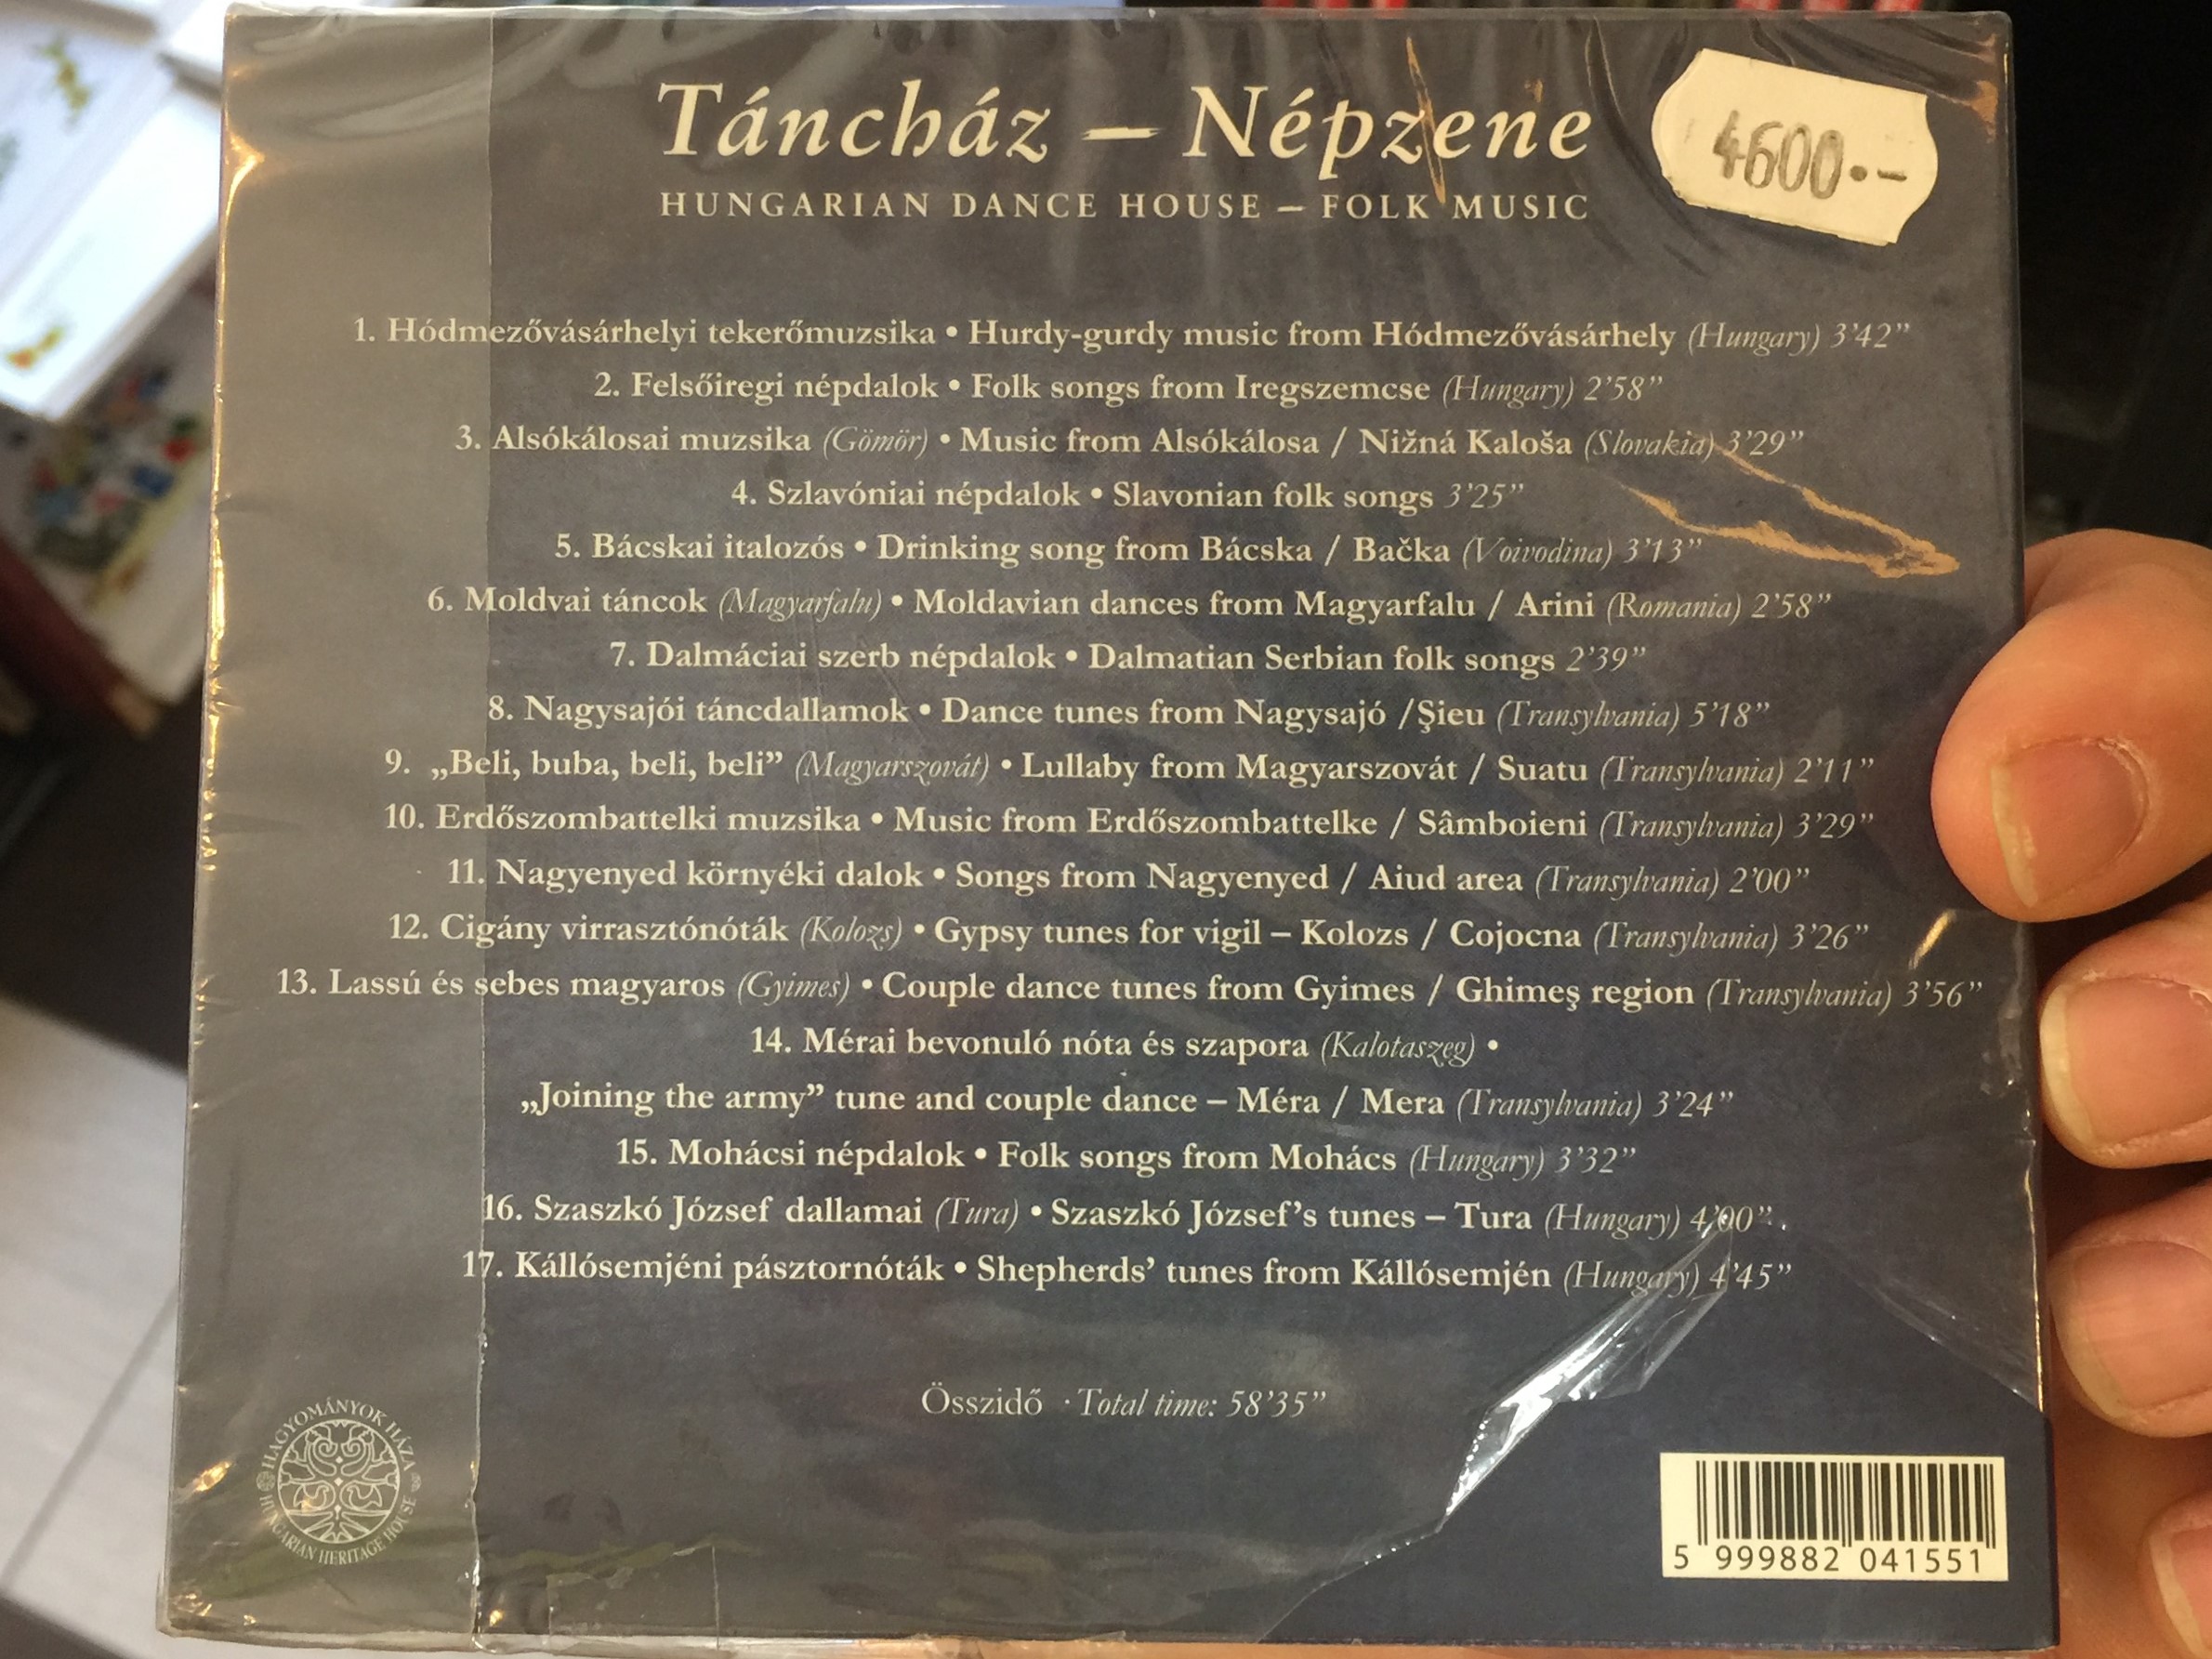 t-nch-z-n-pzene-2013-hungarian-dance-house-folk-music-hagyom-nyok-h-za-audio-cd-2013-5999882041551-2-.jpg